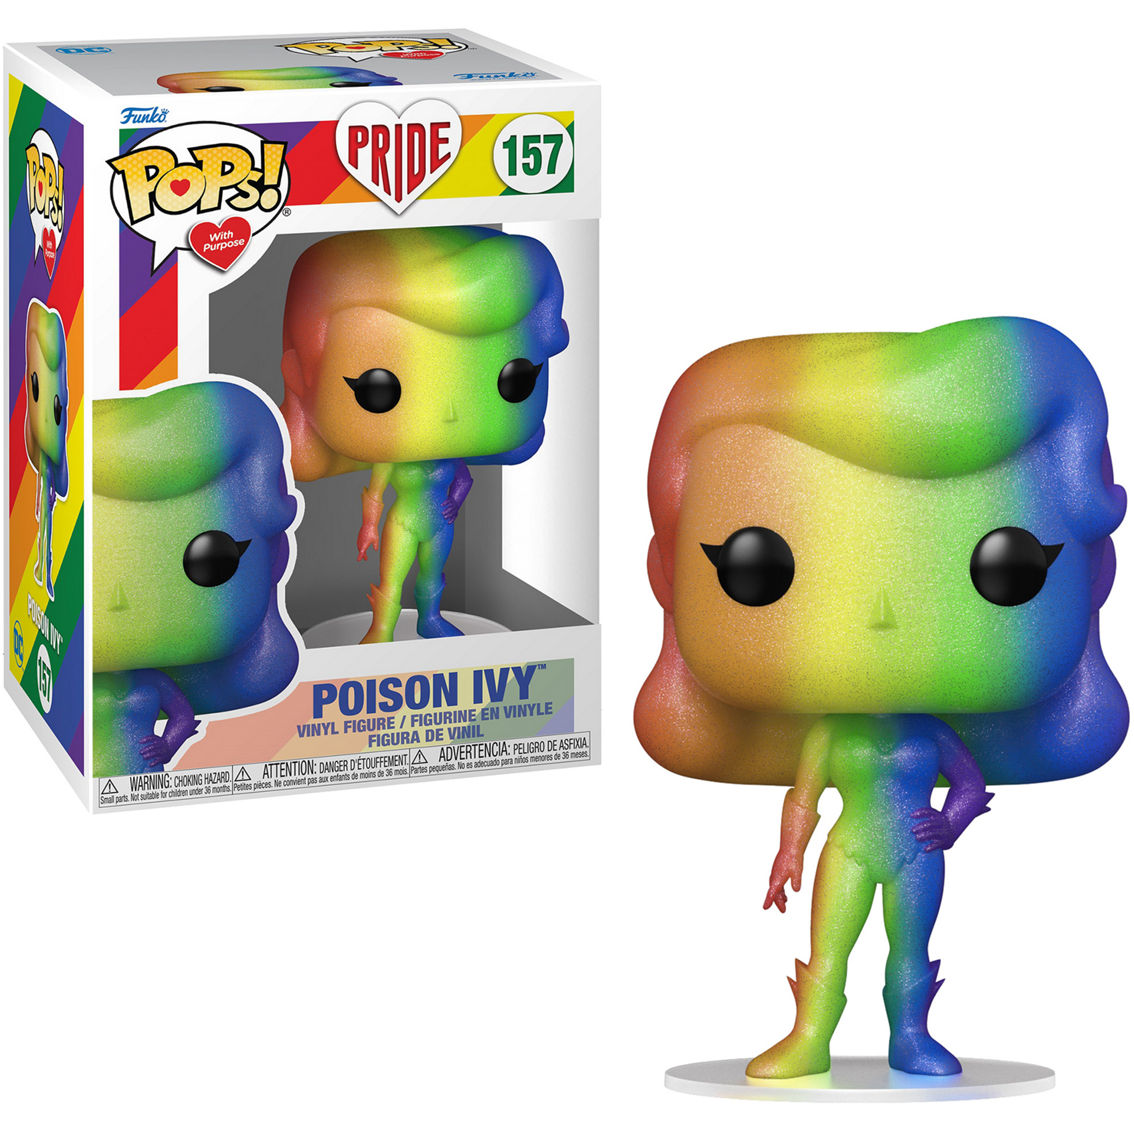 Funko POP! DC Heroes Pride Collector Set - Image 3 of 5